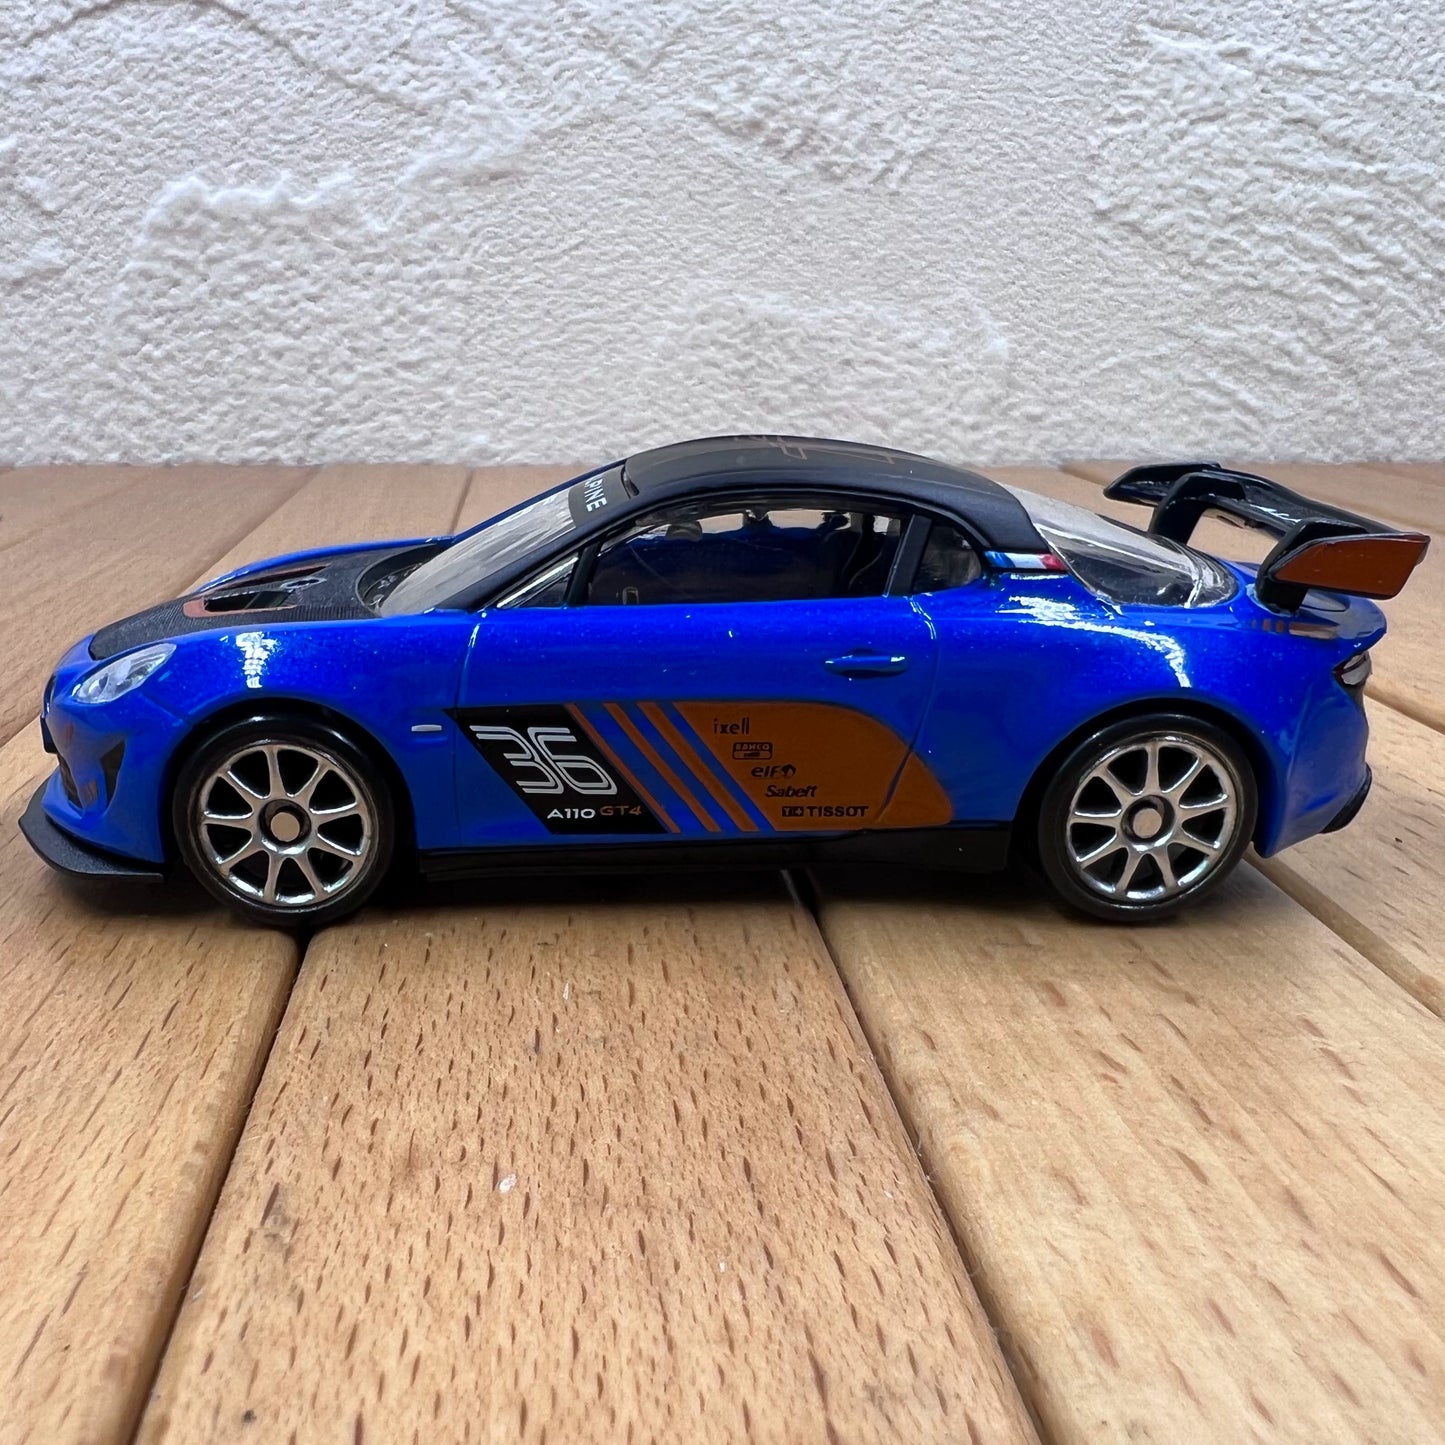 1/43 Scale Alpine A110 GT4 Sports Car Diecast Model